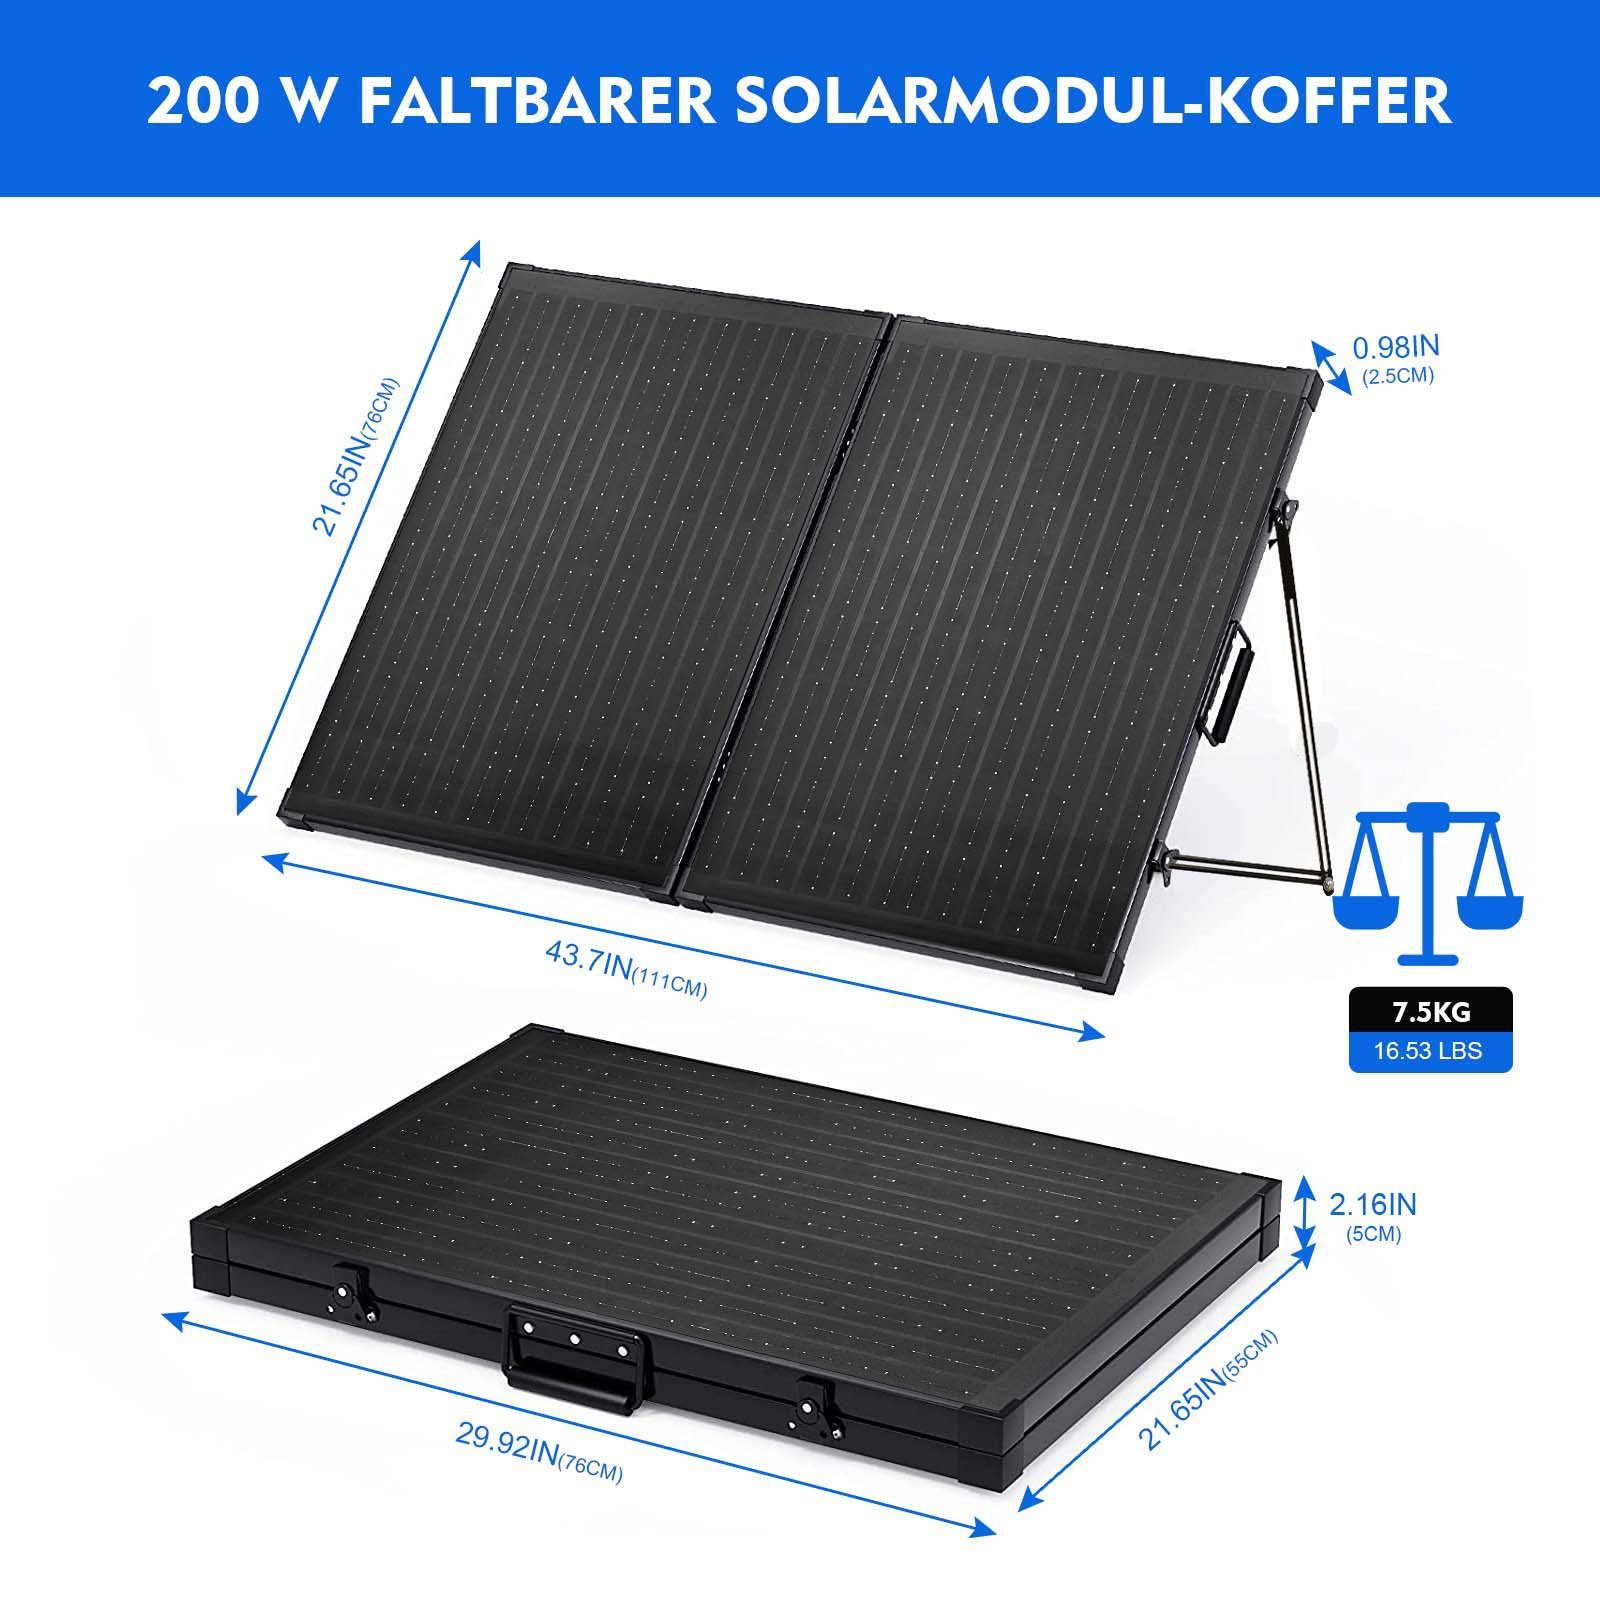 GLIESE Solarmodul Tragbares 200-W-Solarmodul,Tragbar und faltbar,hohe Konversionsrate